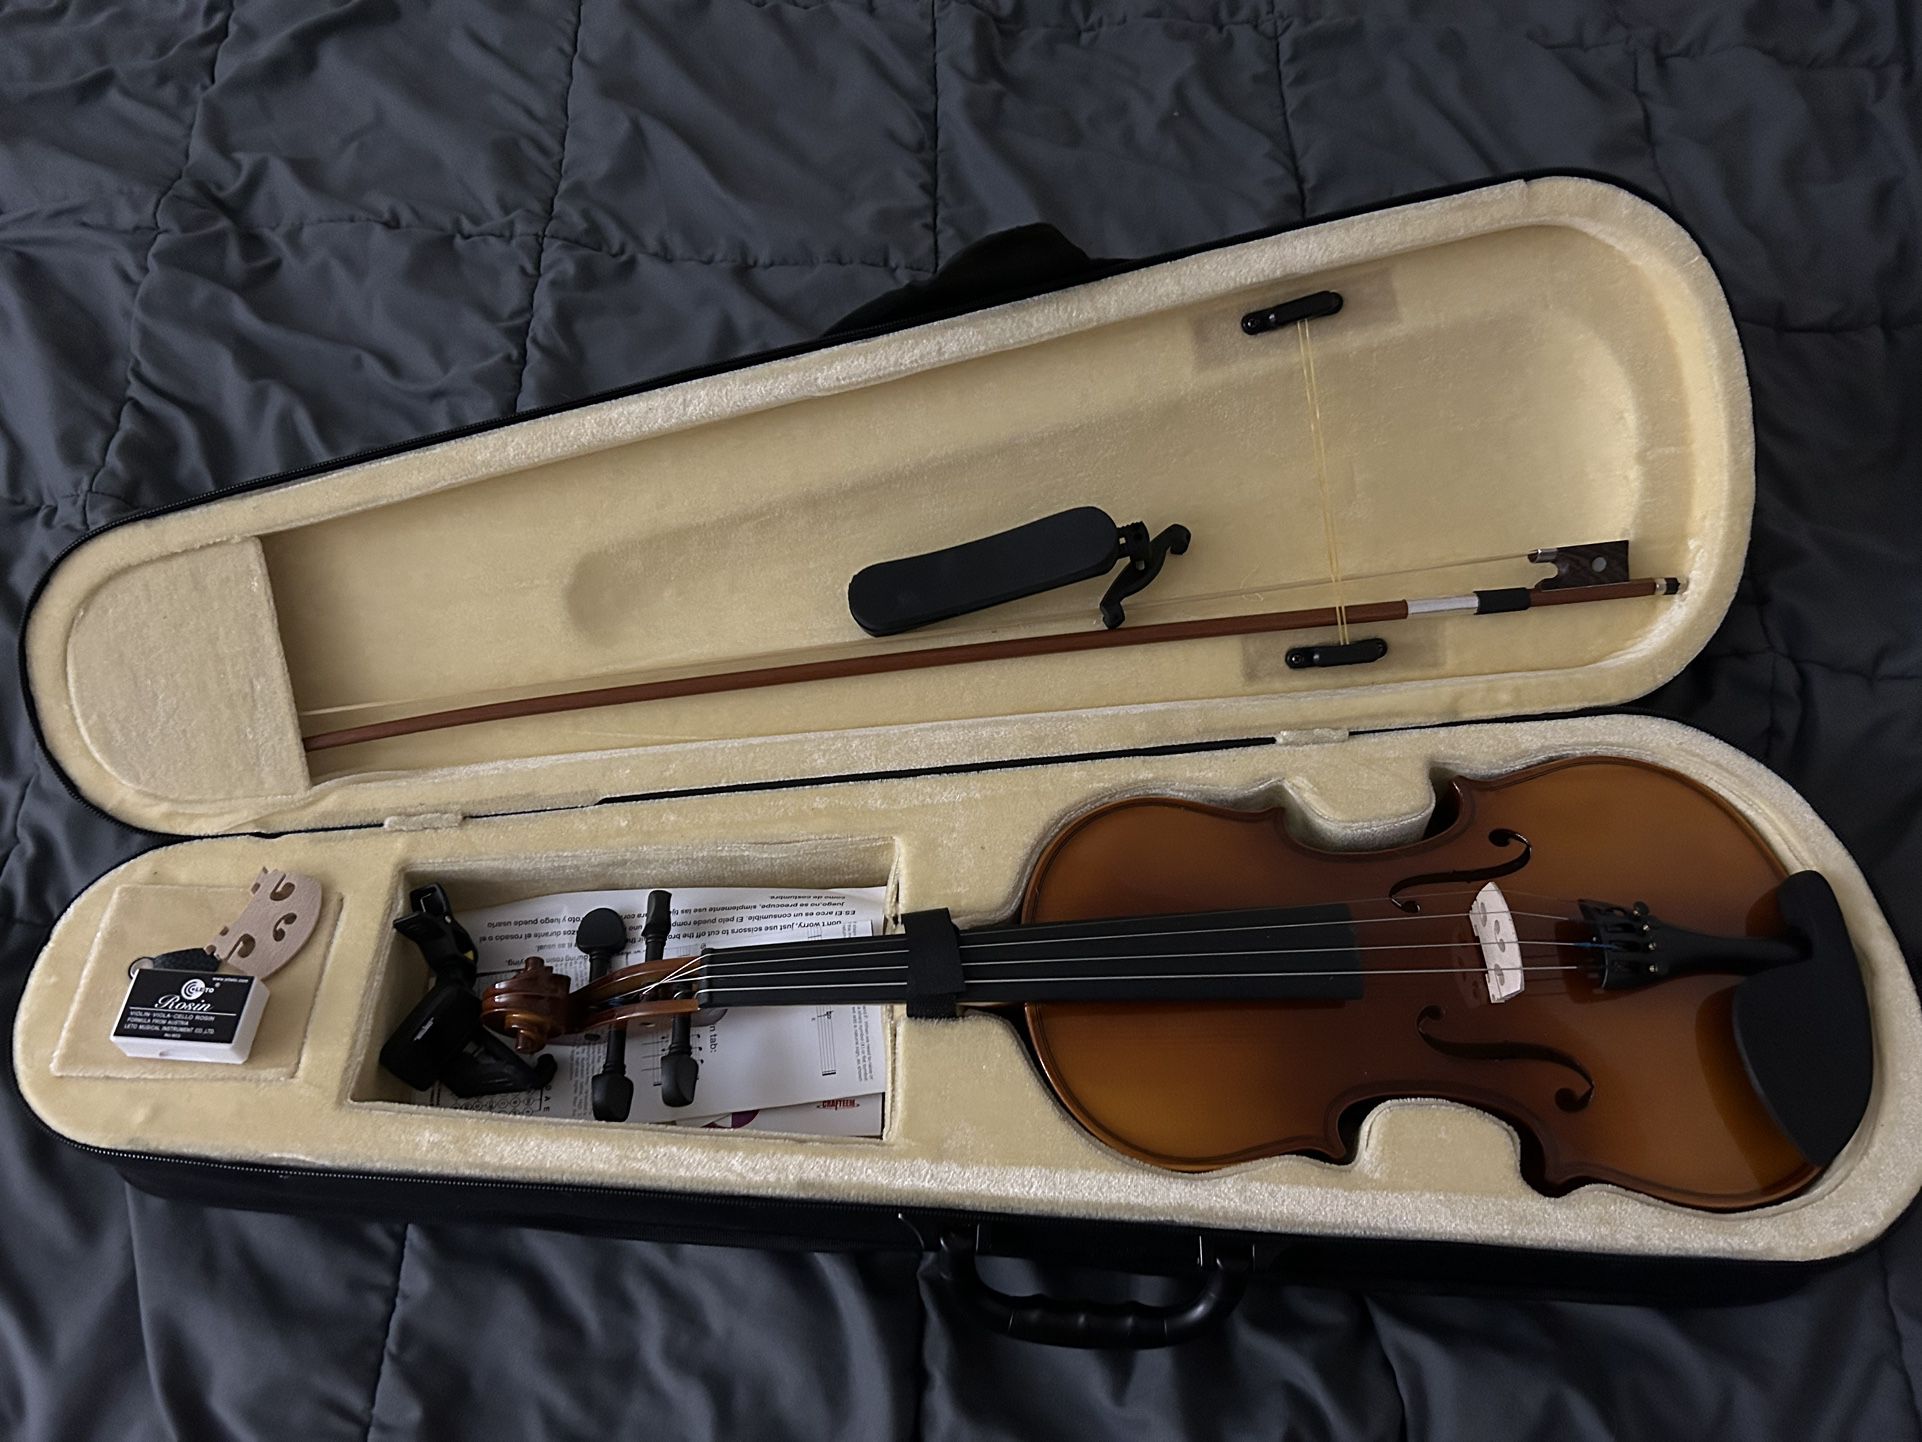 Crafteem 4/4 Violin